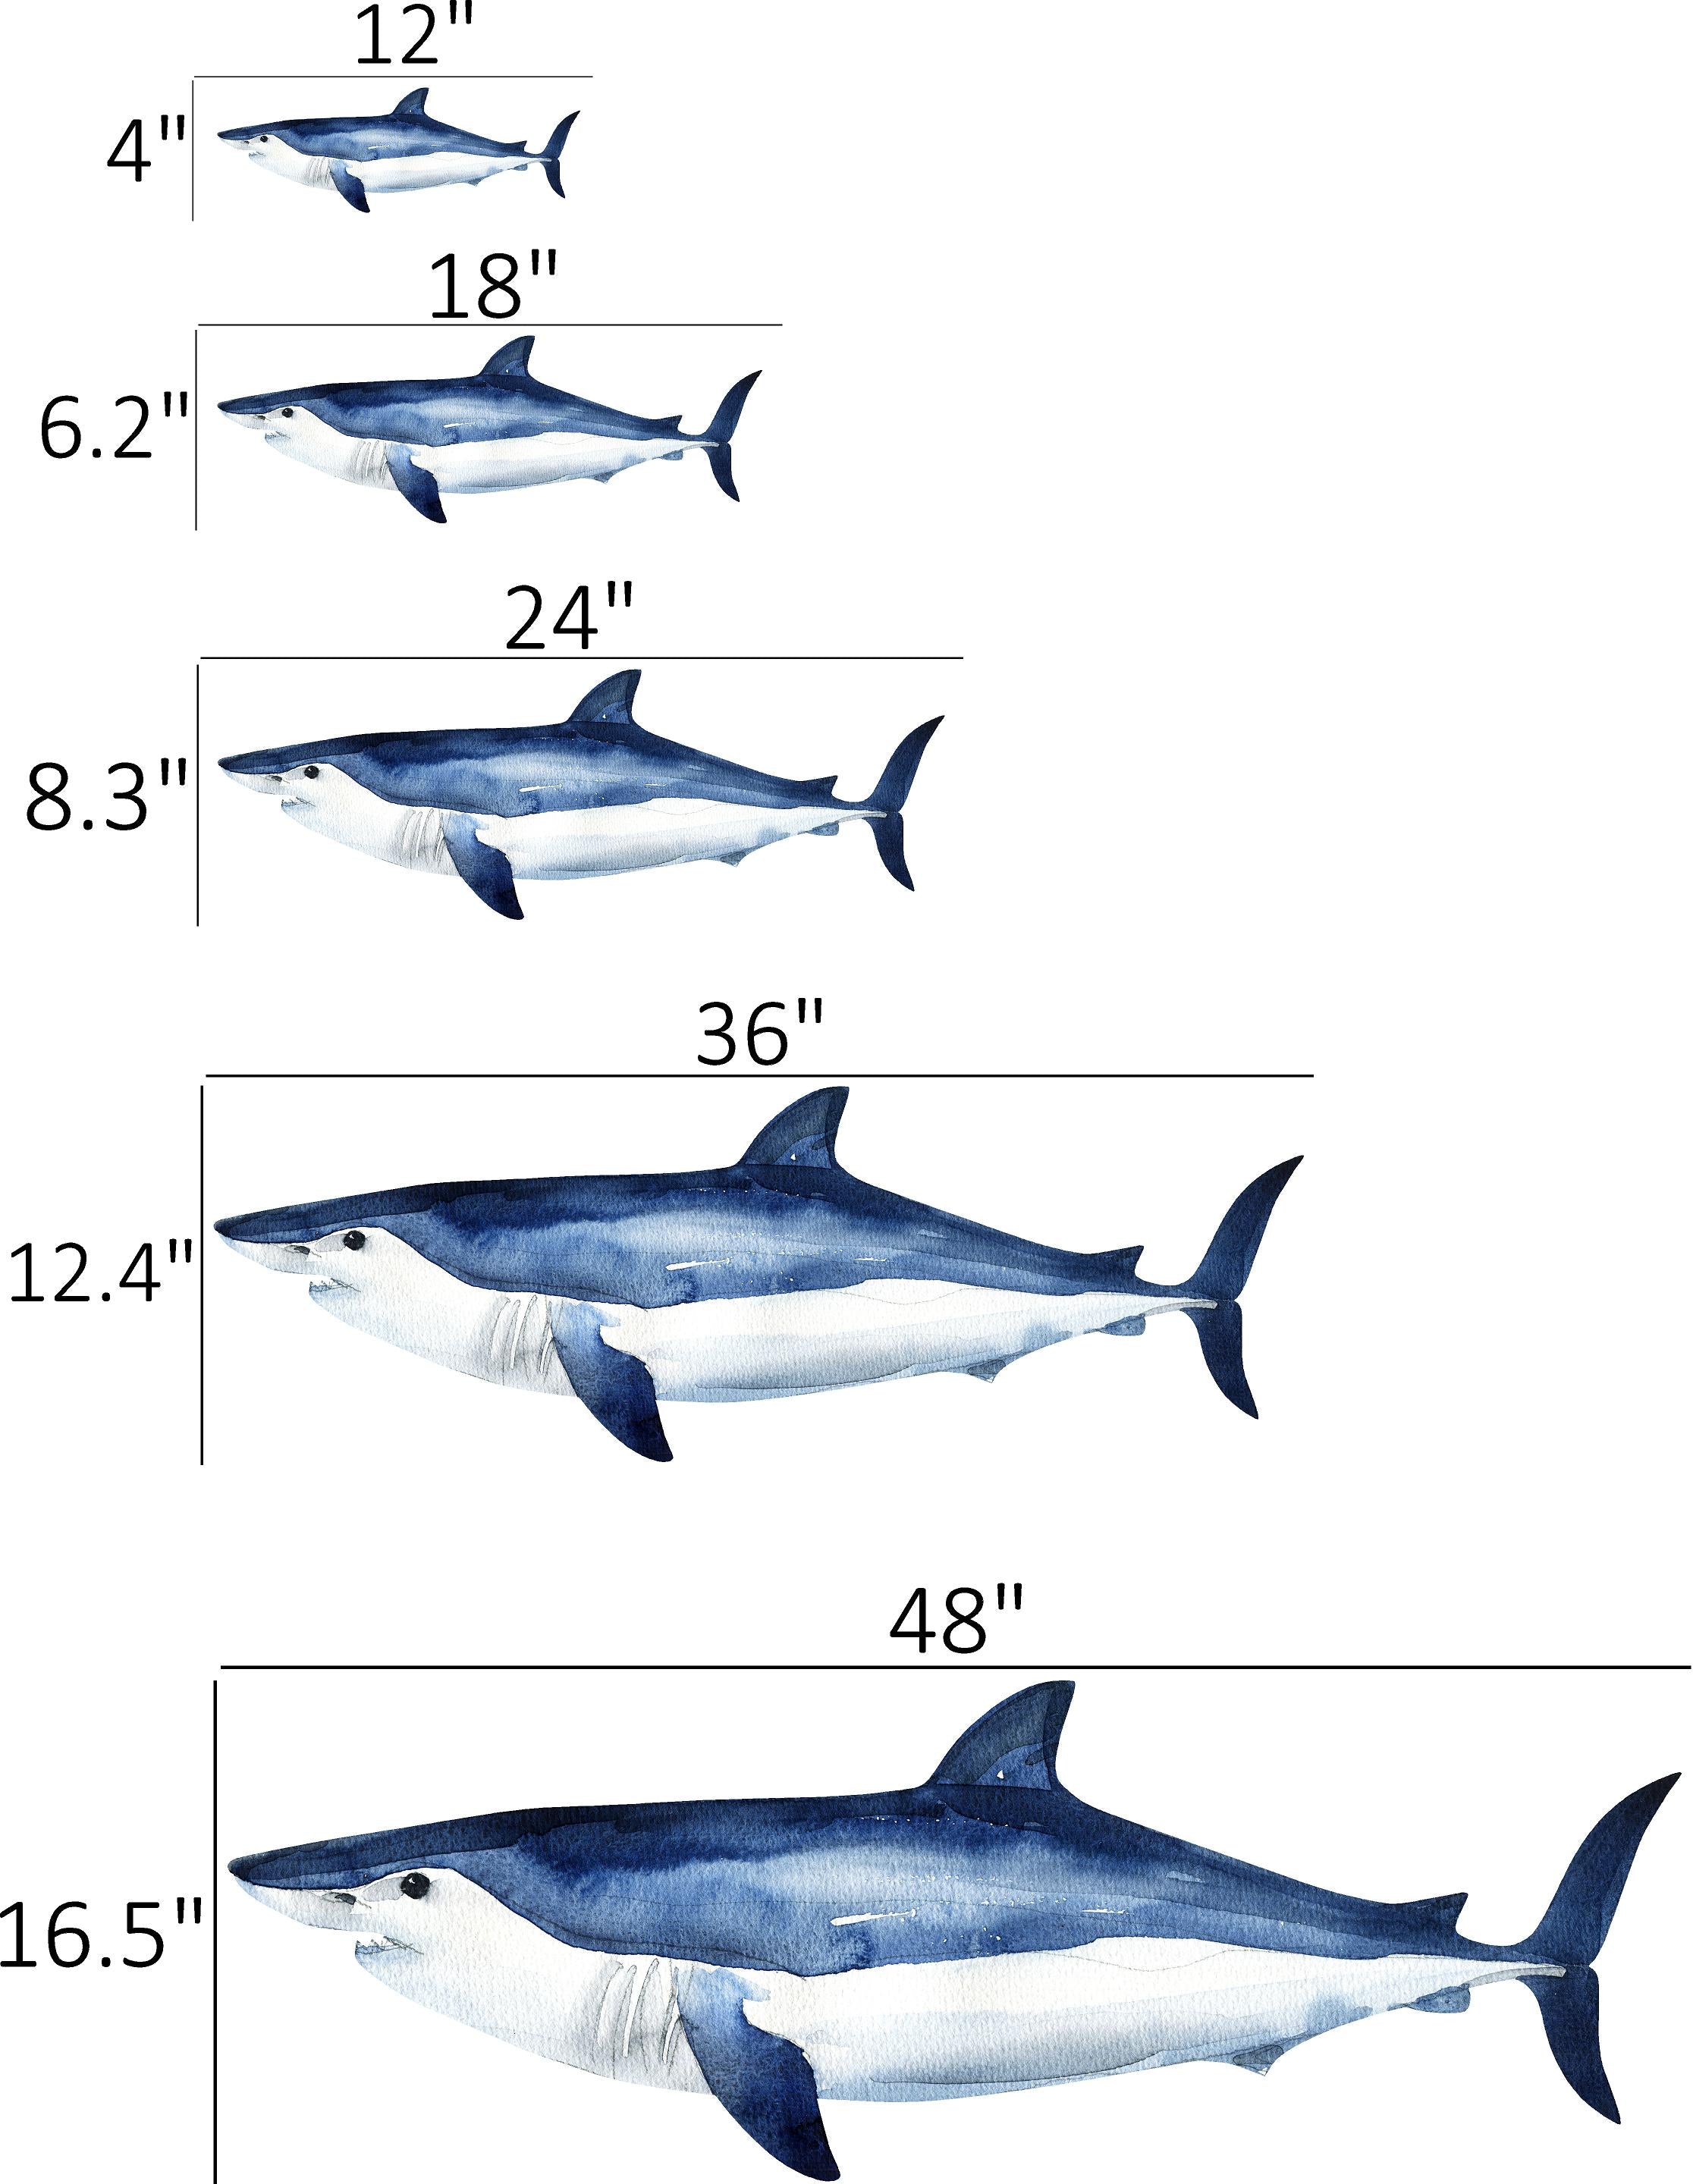 Watercolor Shortfin Mako Shark Wall Decal Removable Under the Sea Animal Fabric Vinyl Wall Sticker